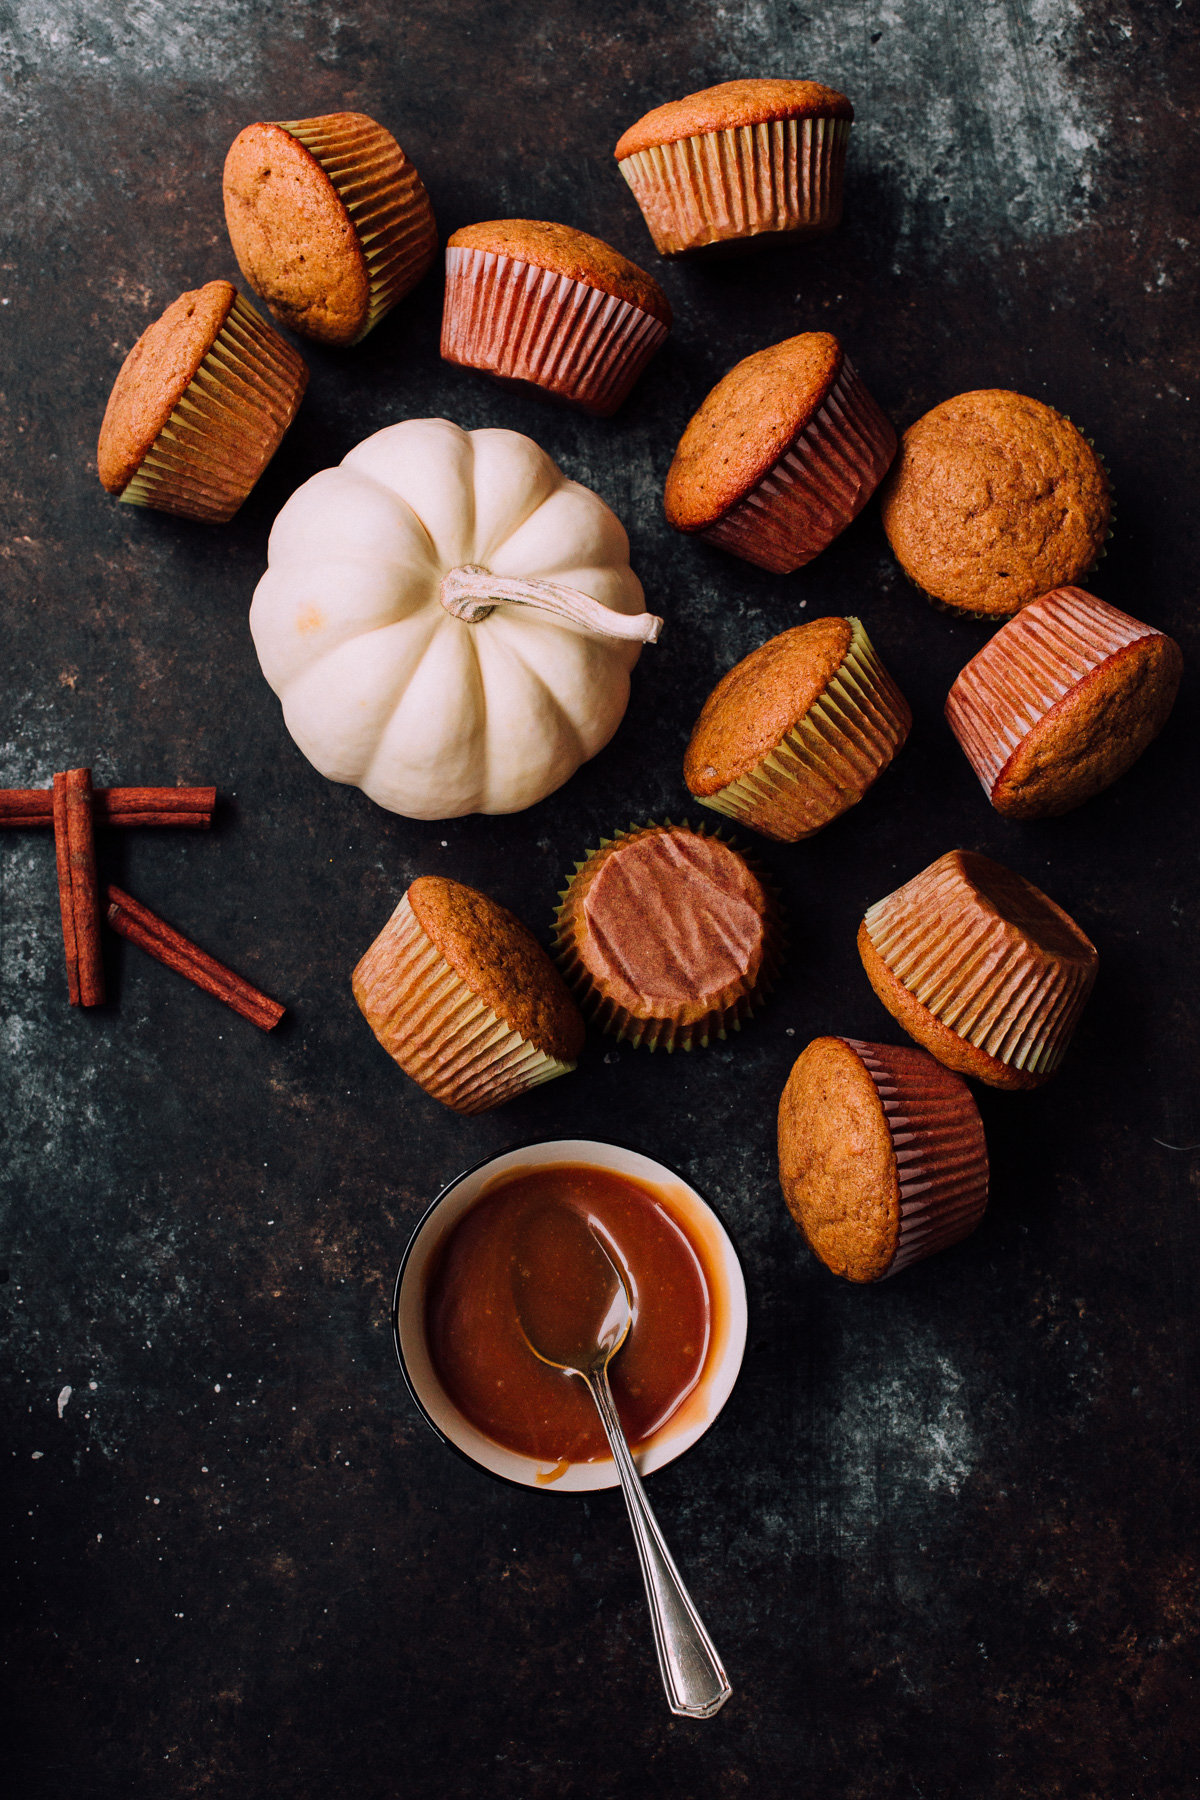 Pumpkin Cupcakes - an easy pumpkin cupcake recipe for the fall holidays!